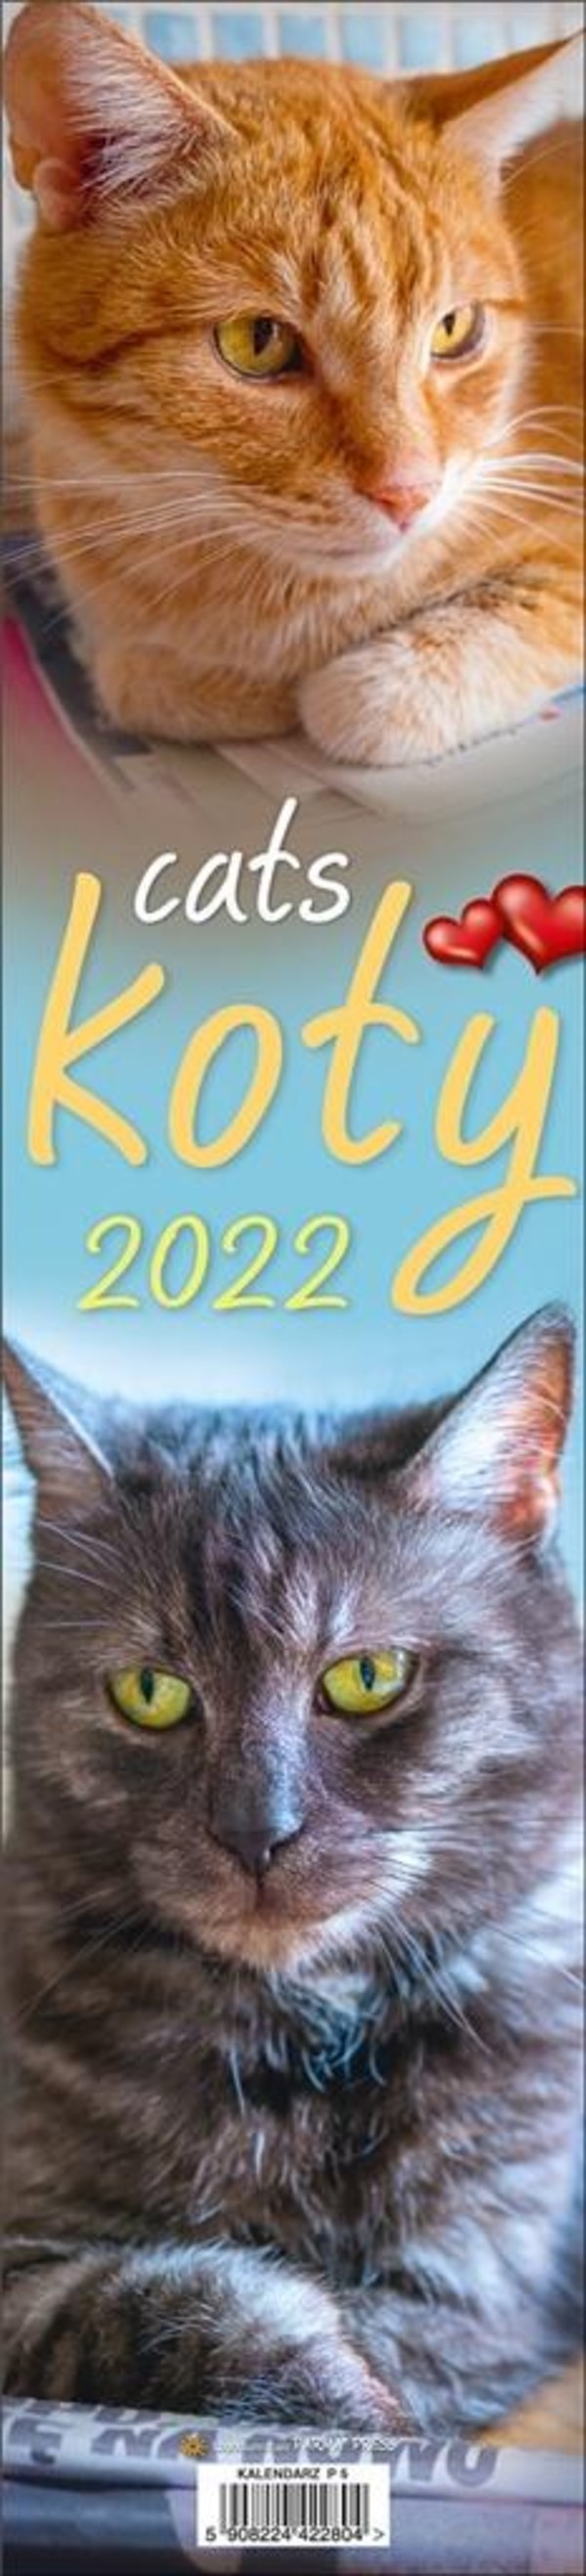 Kalendarz 2022 Paskowy Koty